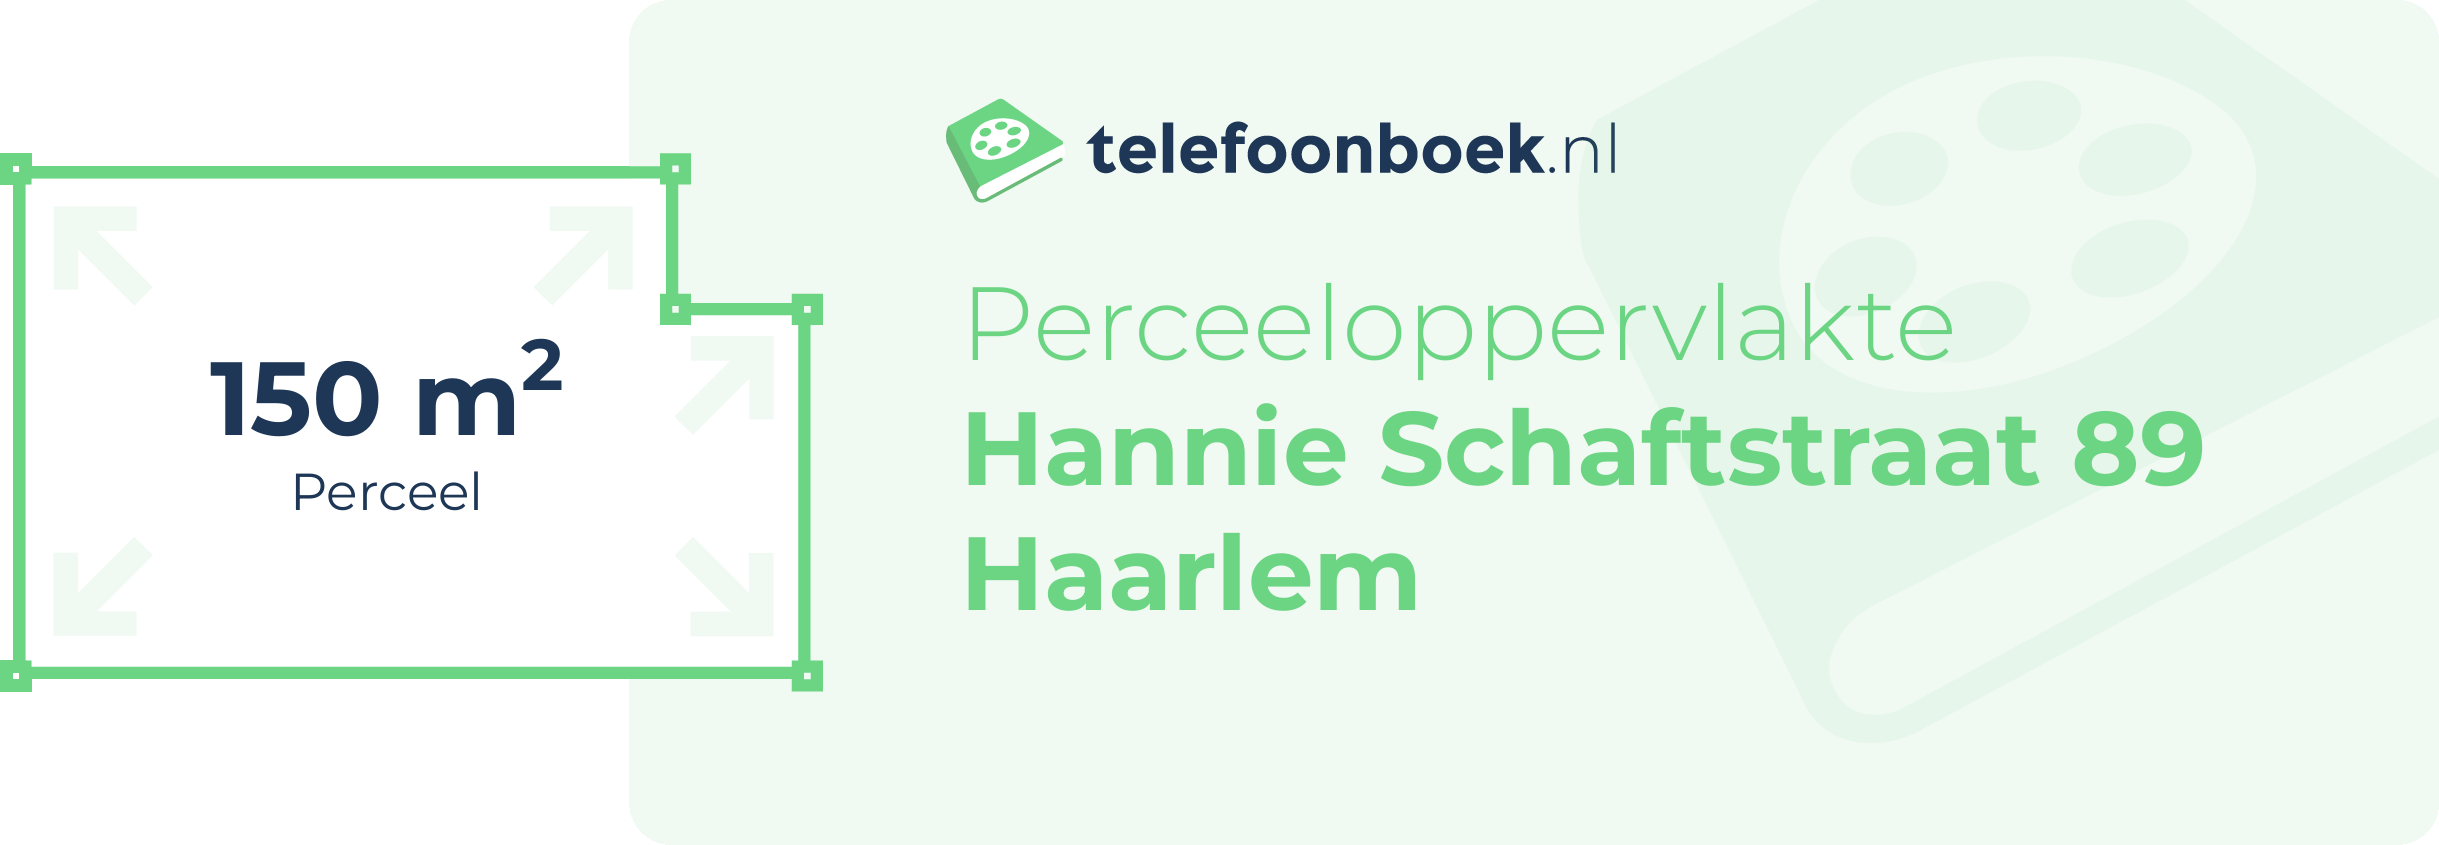 Perceeloppervlakte Hannie Schaftstraat 89 Haarlem